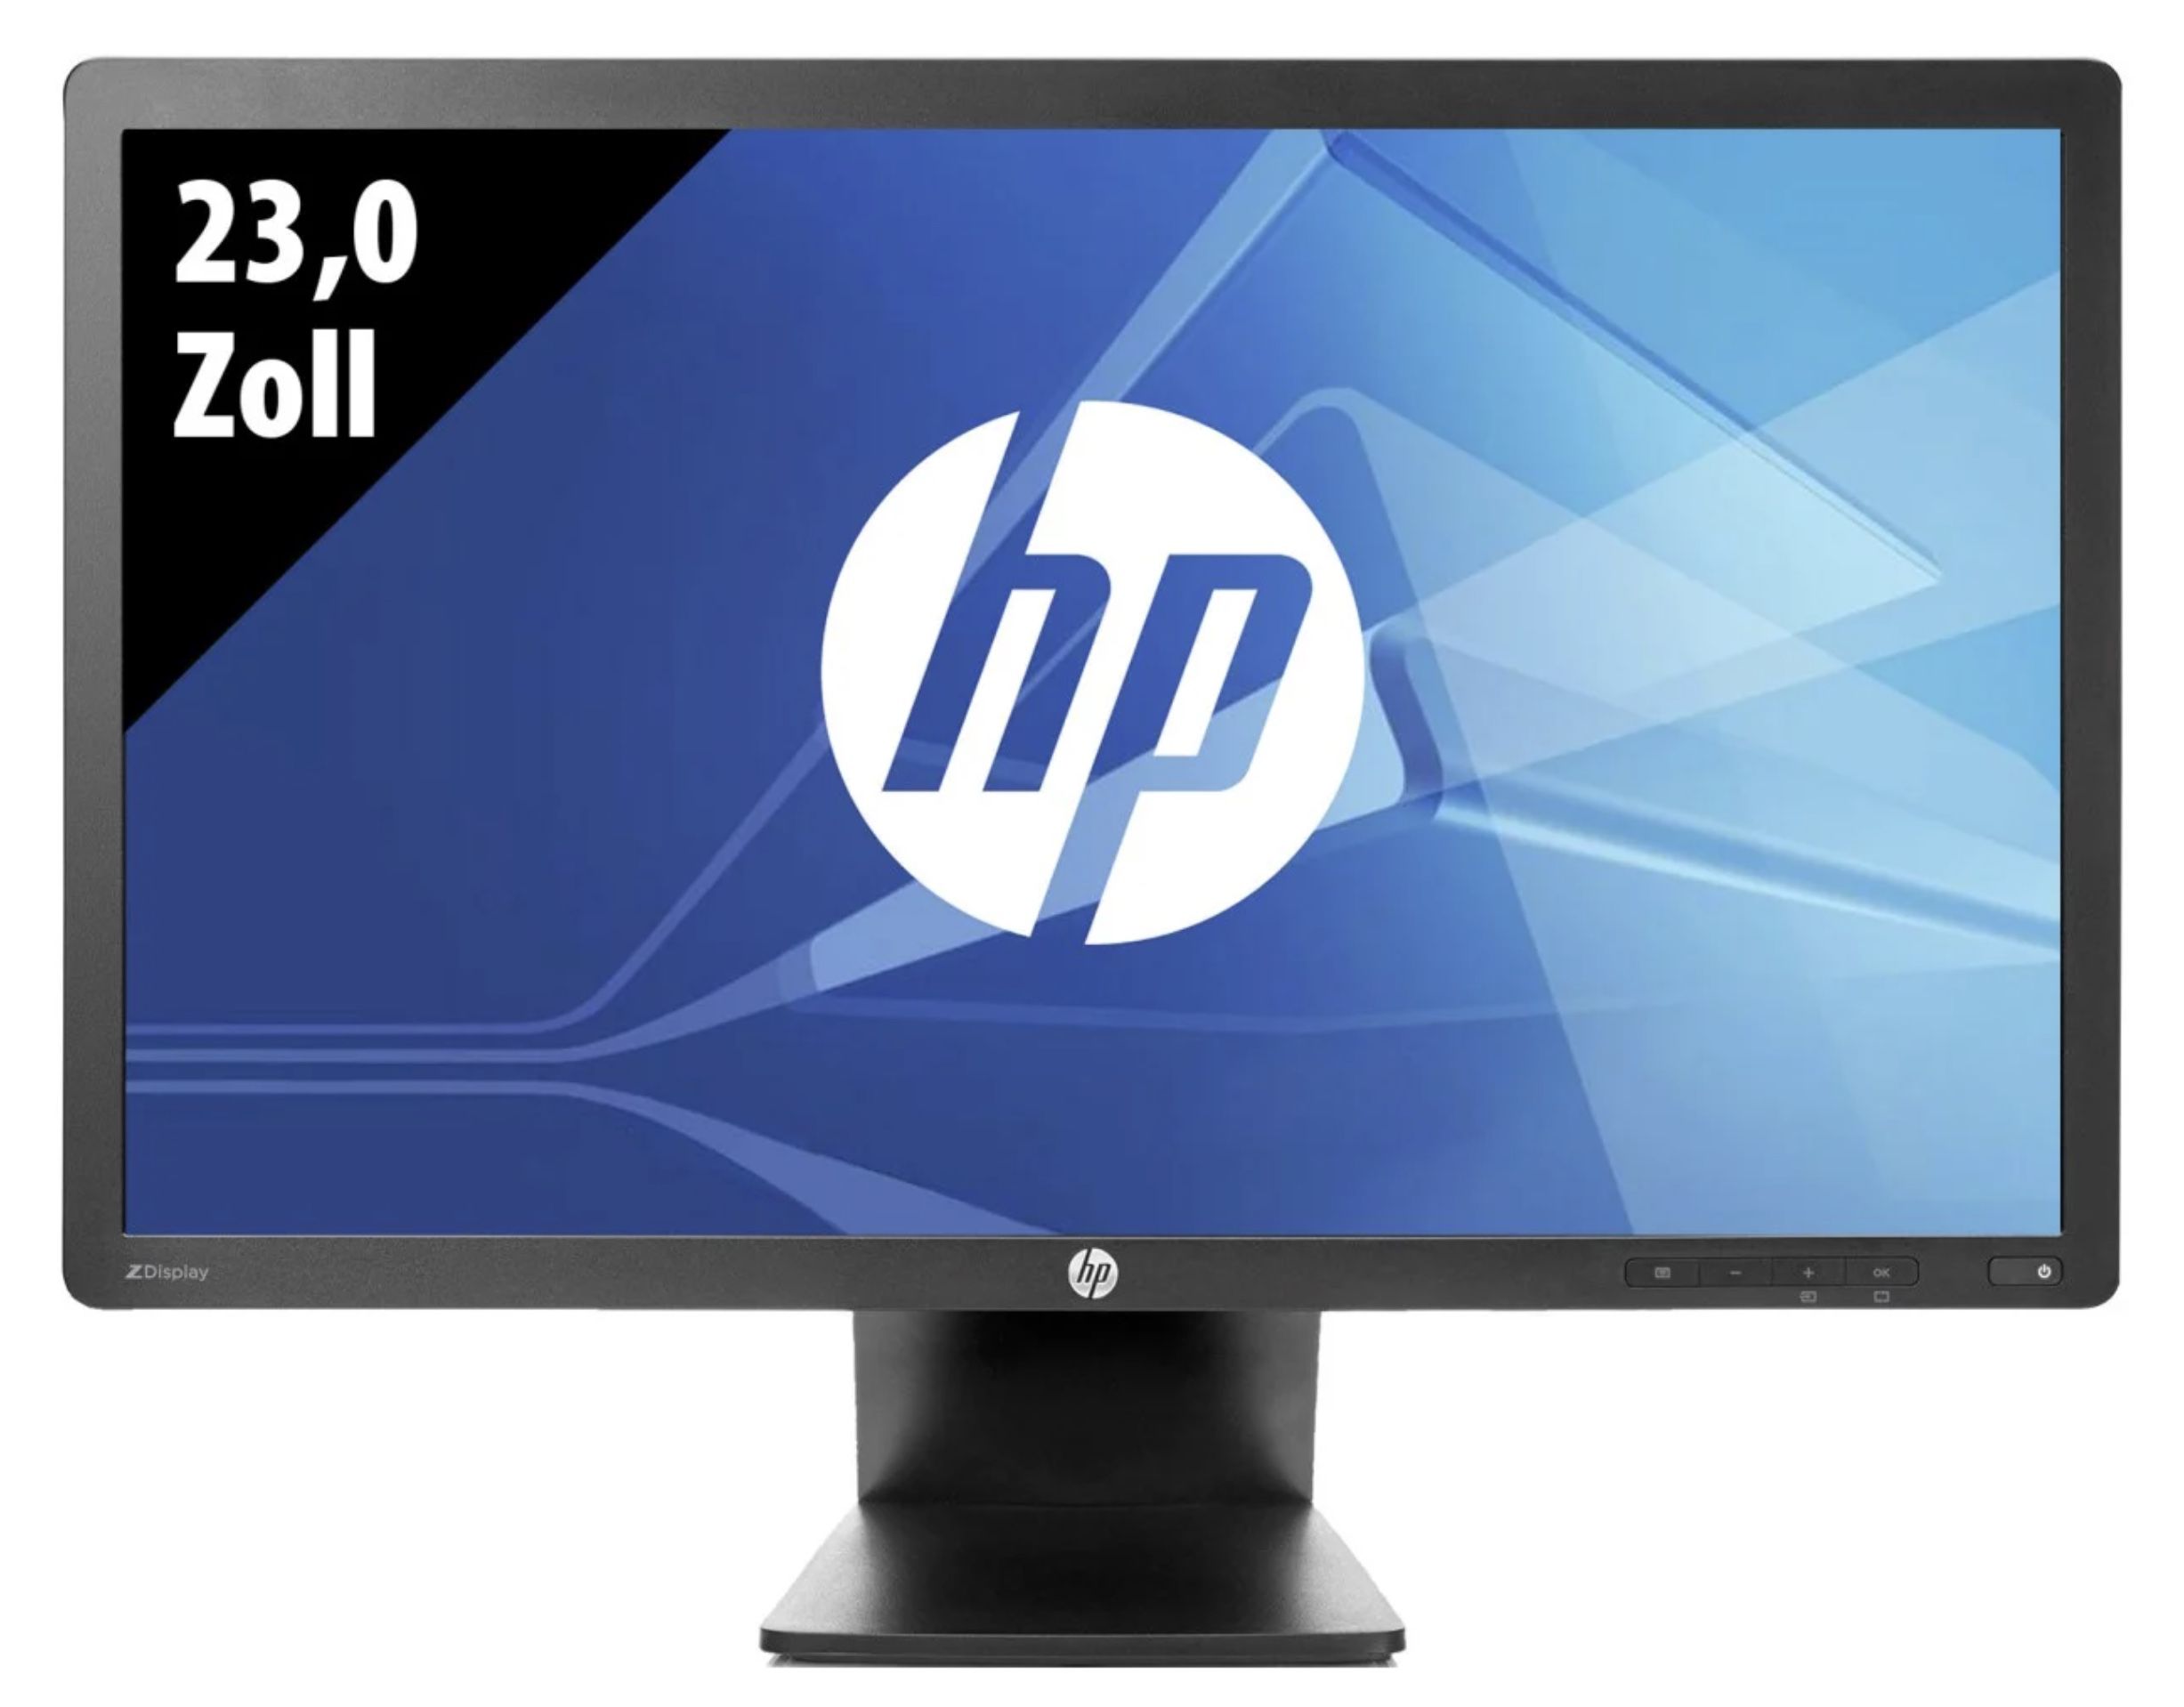 HP Z23i   23 Zoll Full HD Monitor für 54,90€   Zustand B